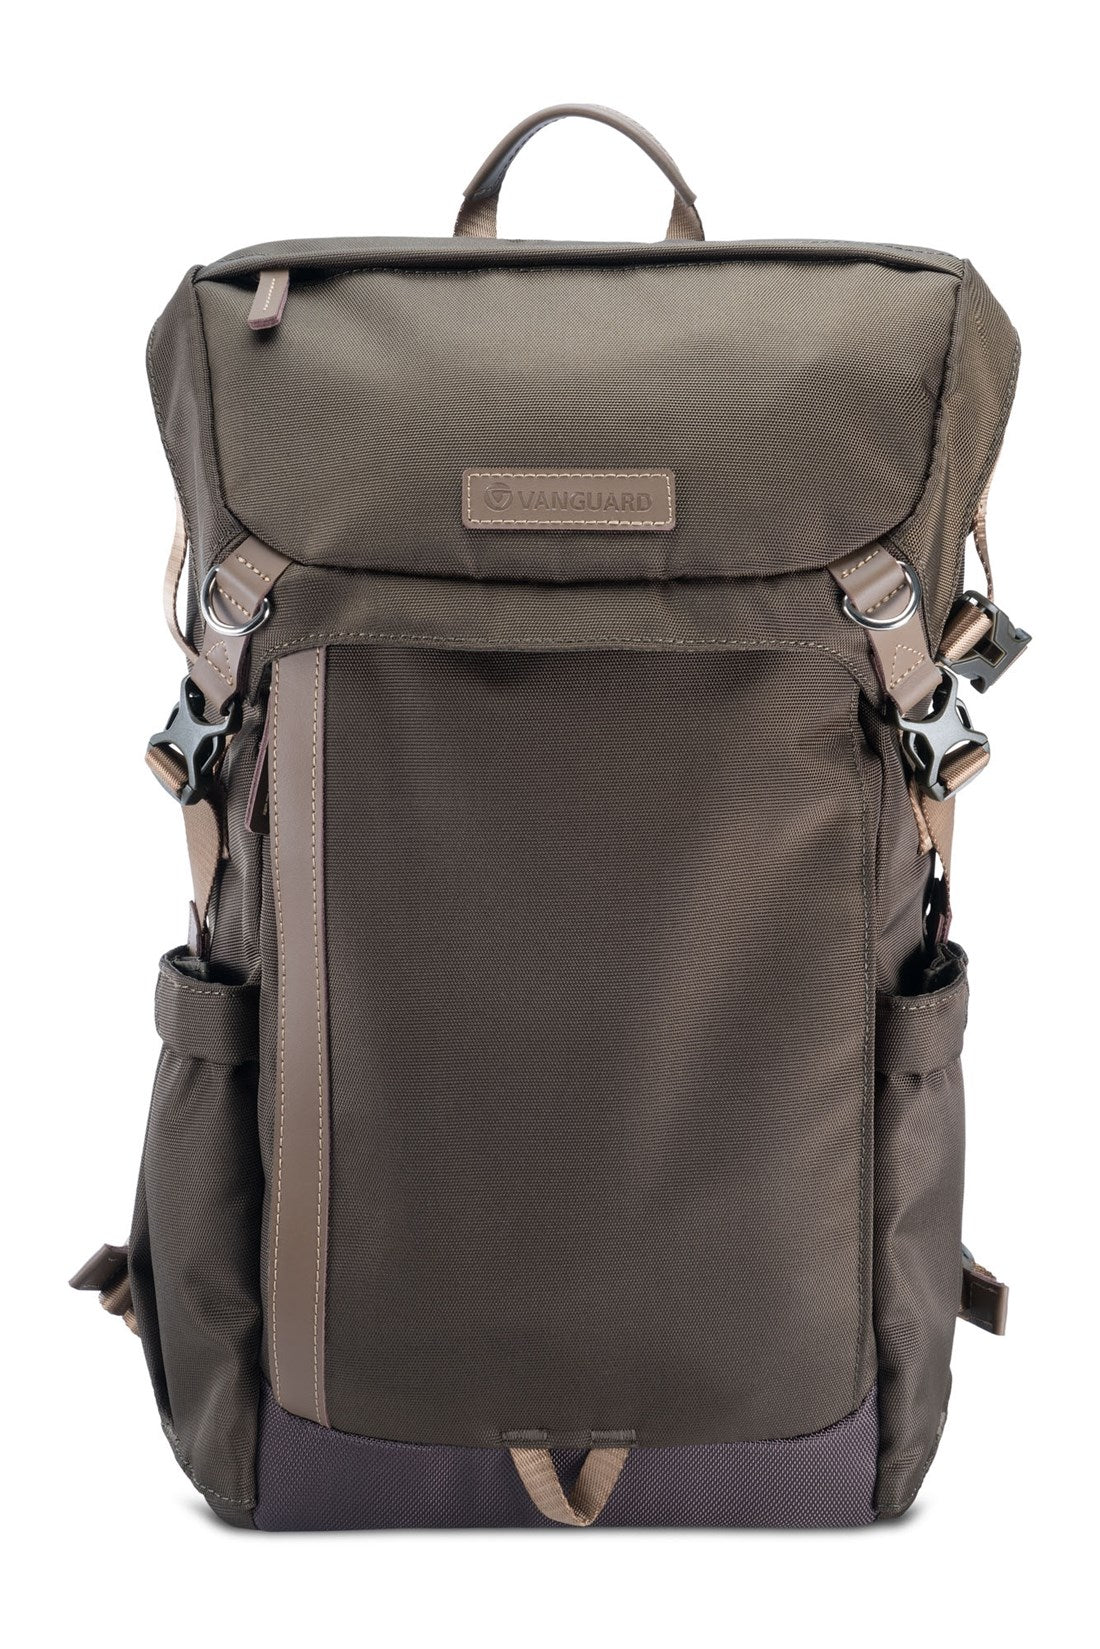 Product Image of Vanguard VEO GO 46M mirrorless backpack - Khaki Green